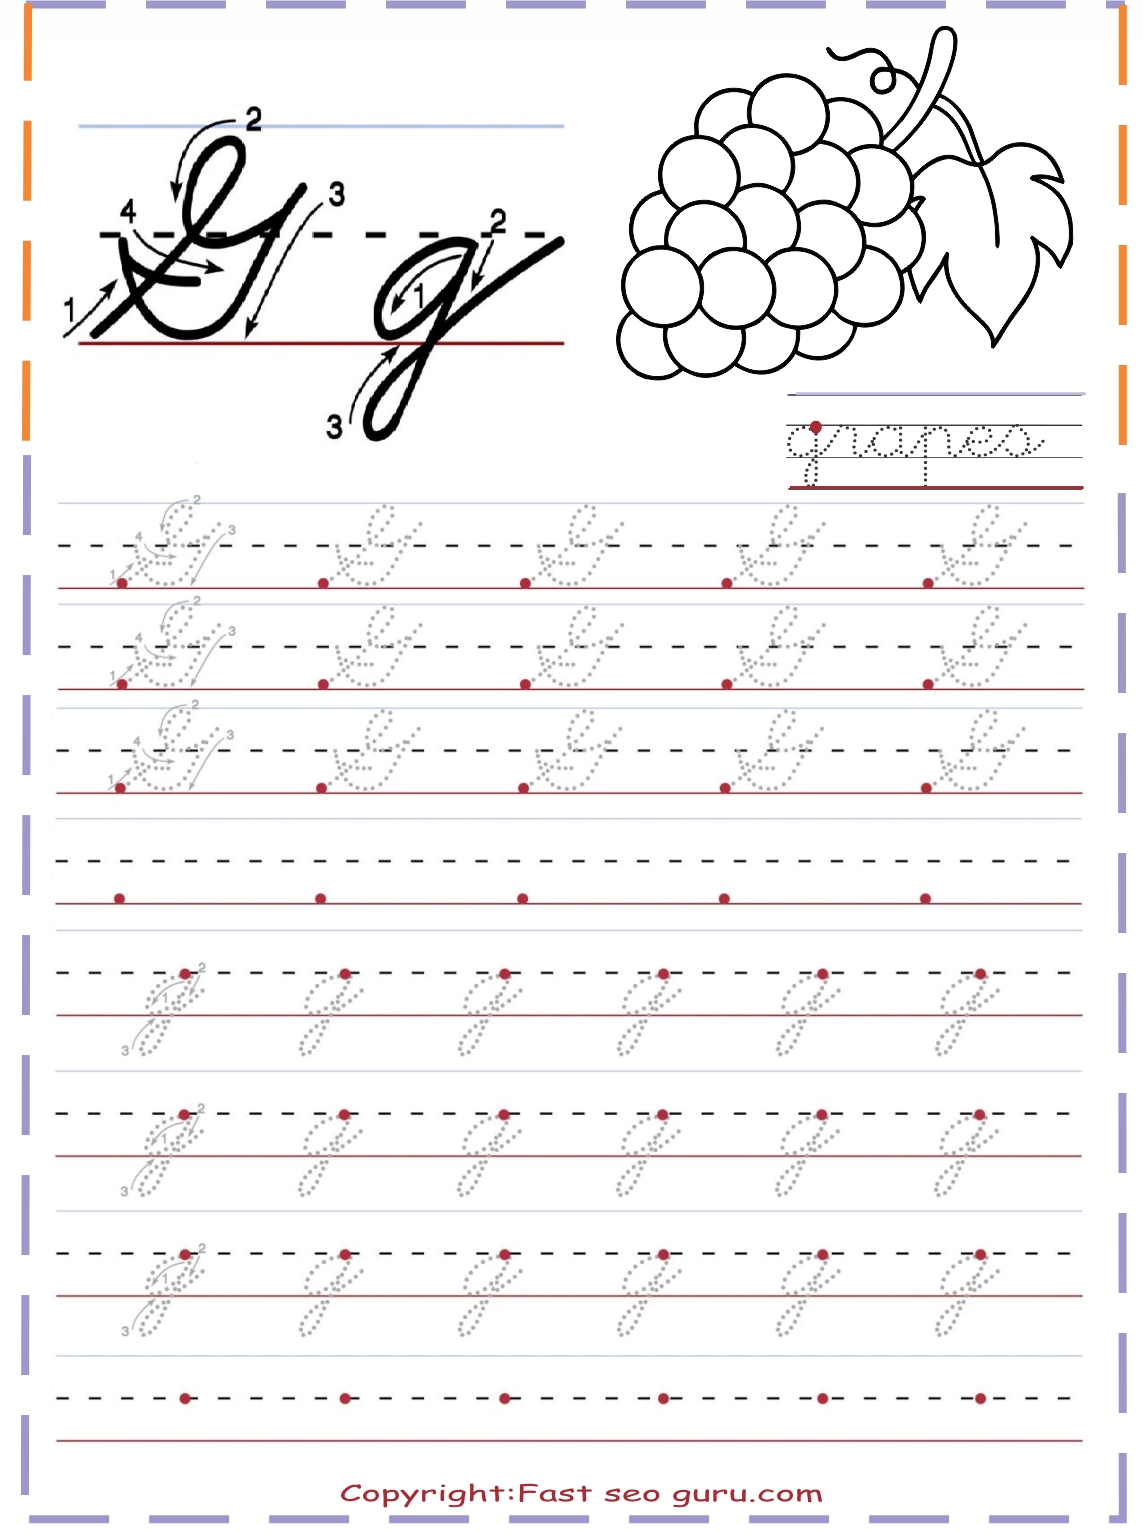 cursive handwriting practice worksheets letter g for grapes